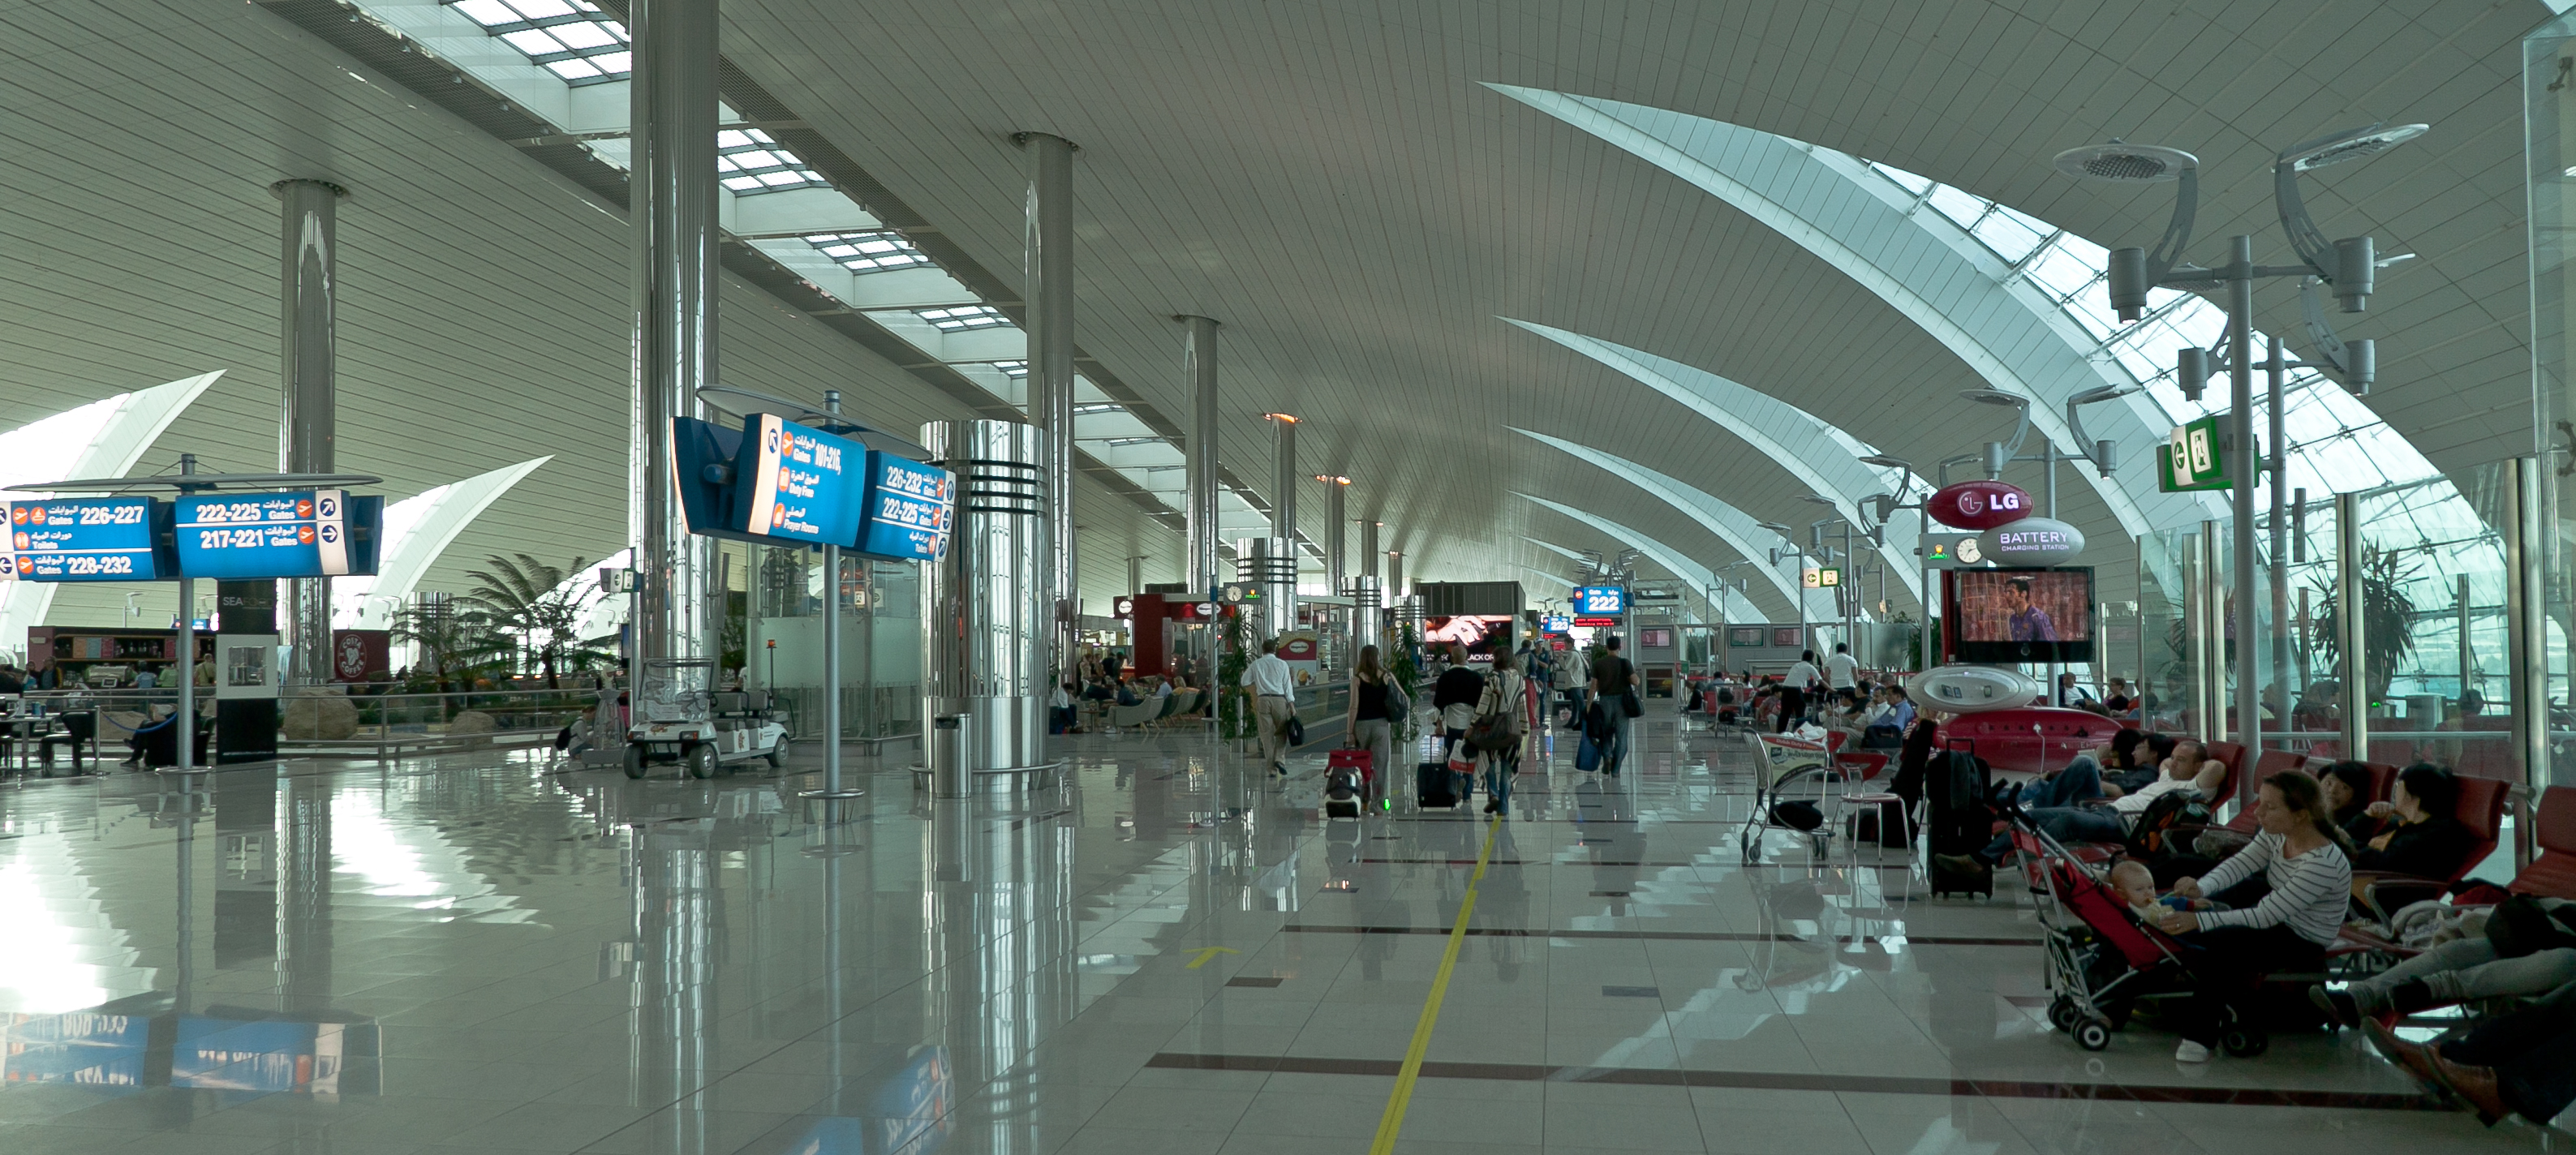 Terminal 3 Dubai airport